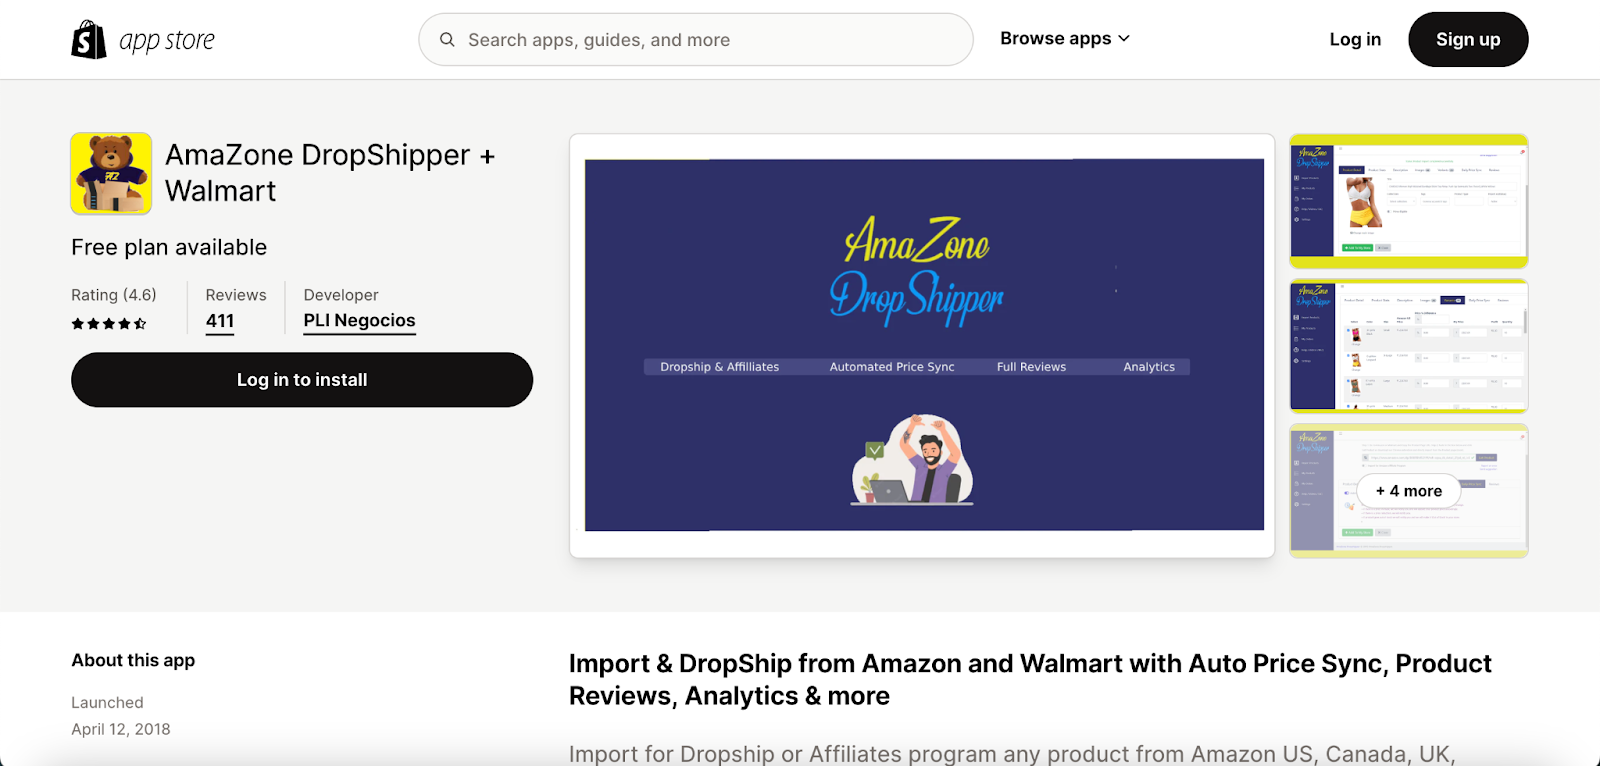 AmaZone DropShipper + Walmart